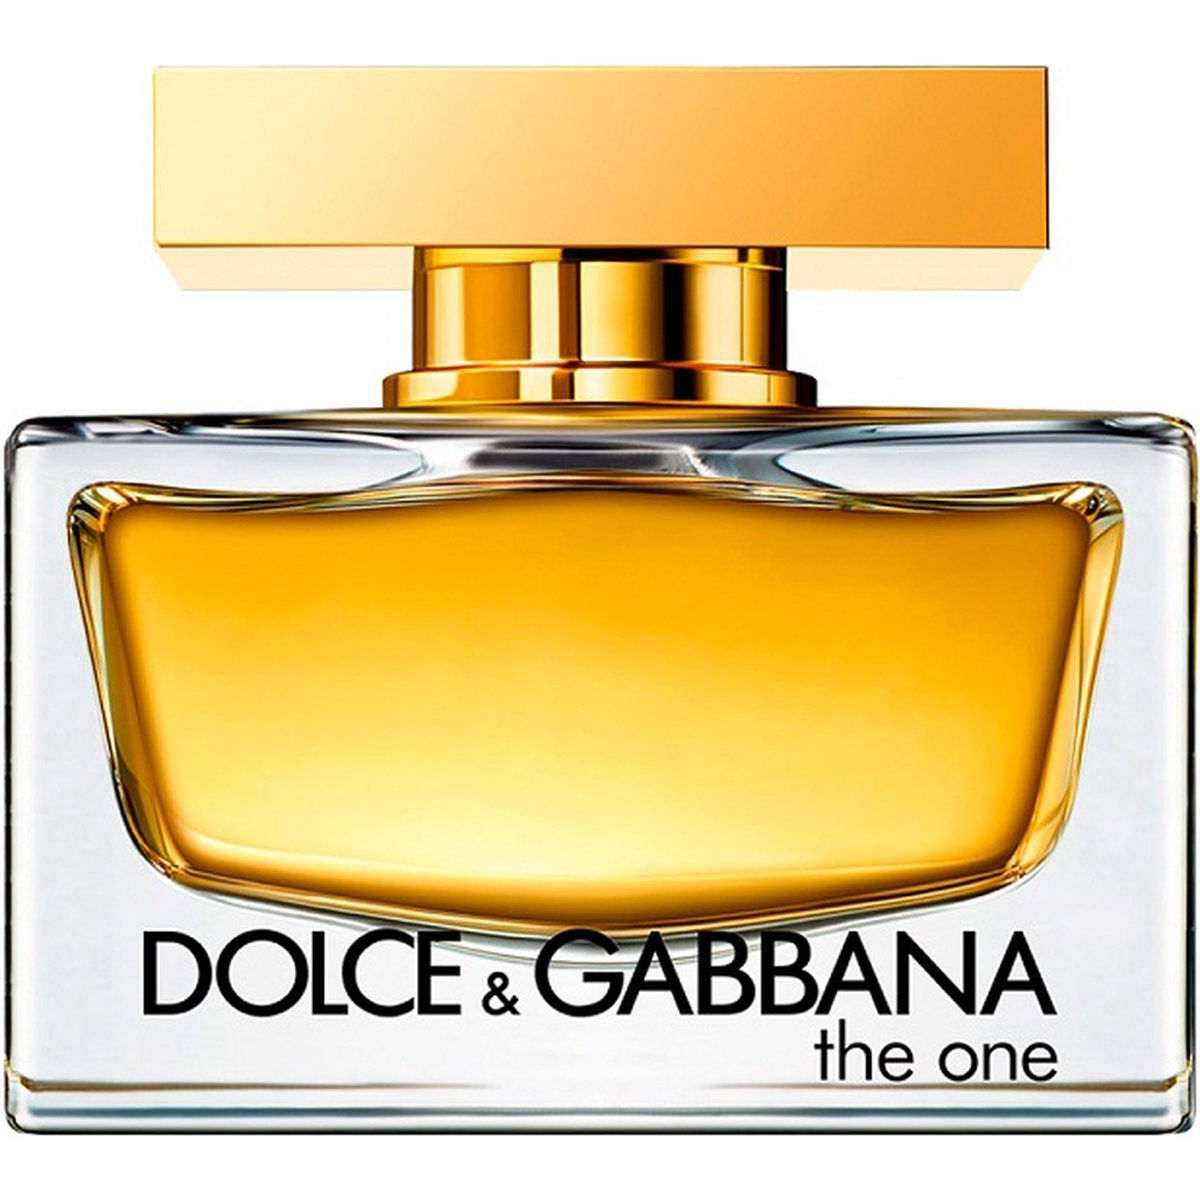 Dolce & Gabbana The One Eau de Parfum Spray 75 ml